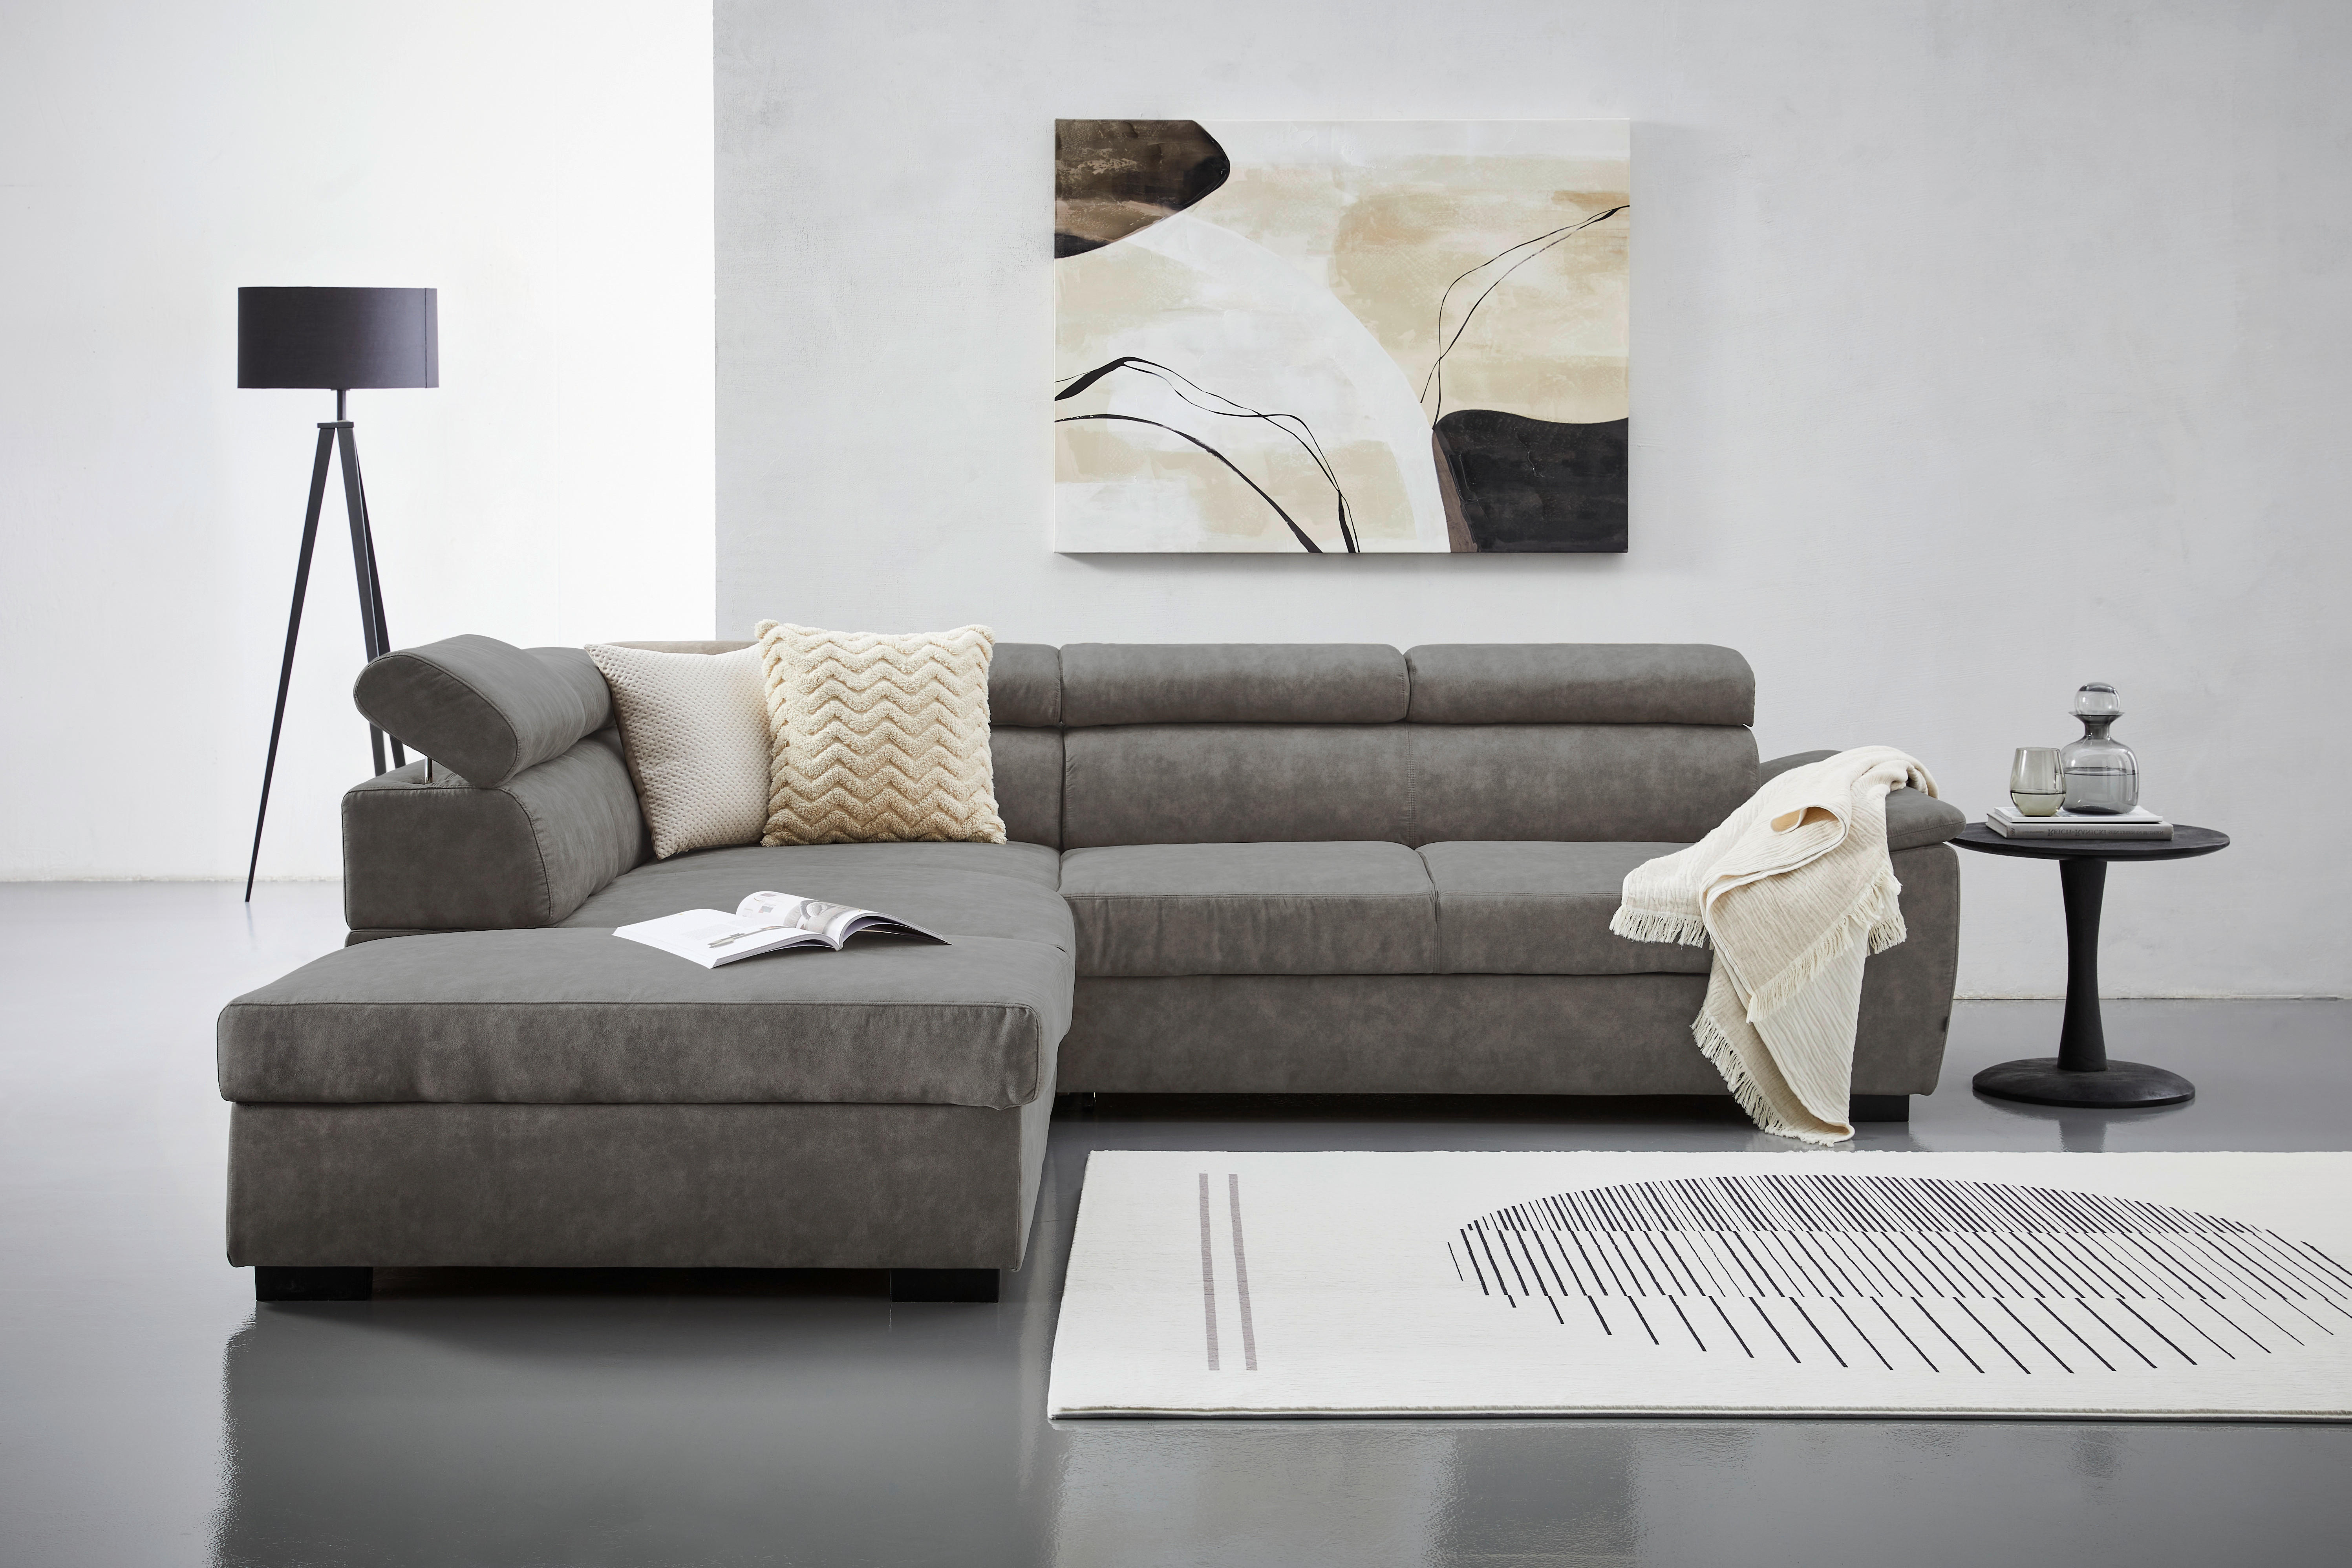 ECKSOFA Grau Lederlook  - Schwarz/Grau, Design, Kunststoff/Textil (230/263cm) - Hom`in